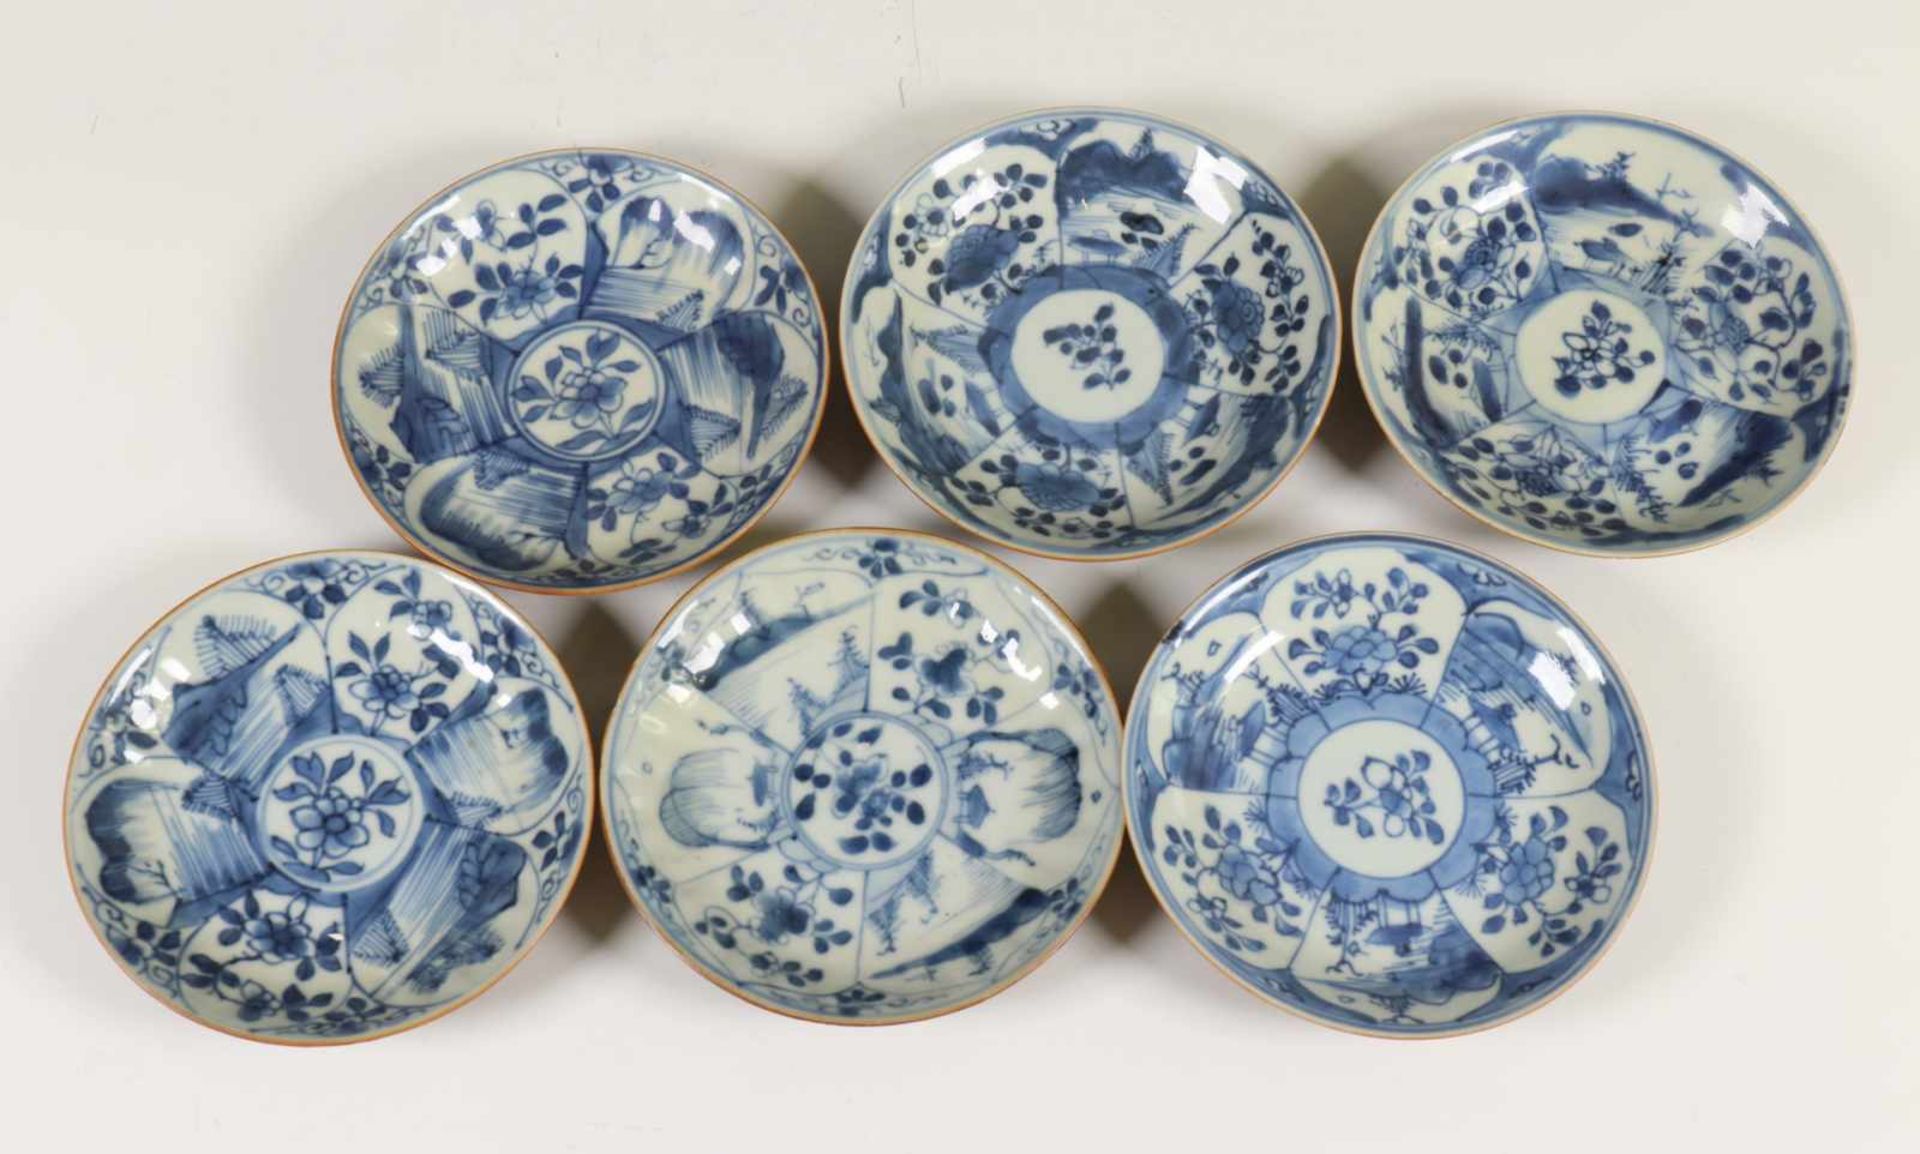 China, zes blauw-wit en cafe-au-lait geglazuurde porseleinen koppen en schotels, 18e eeuw,de - Bild 2 aus 5